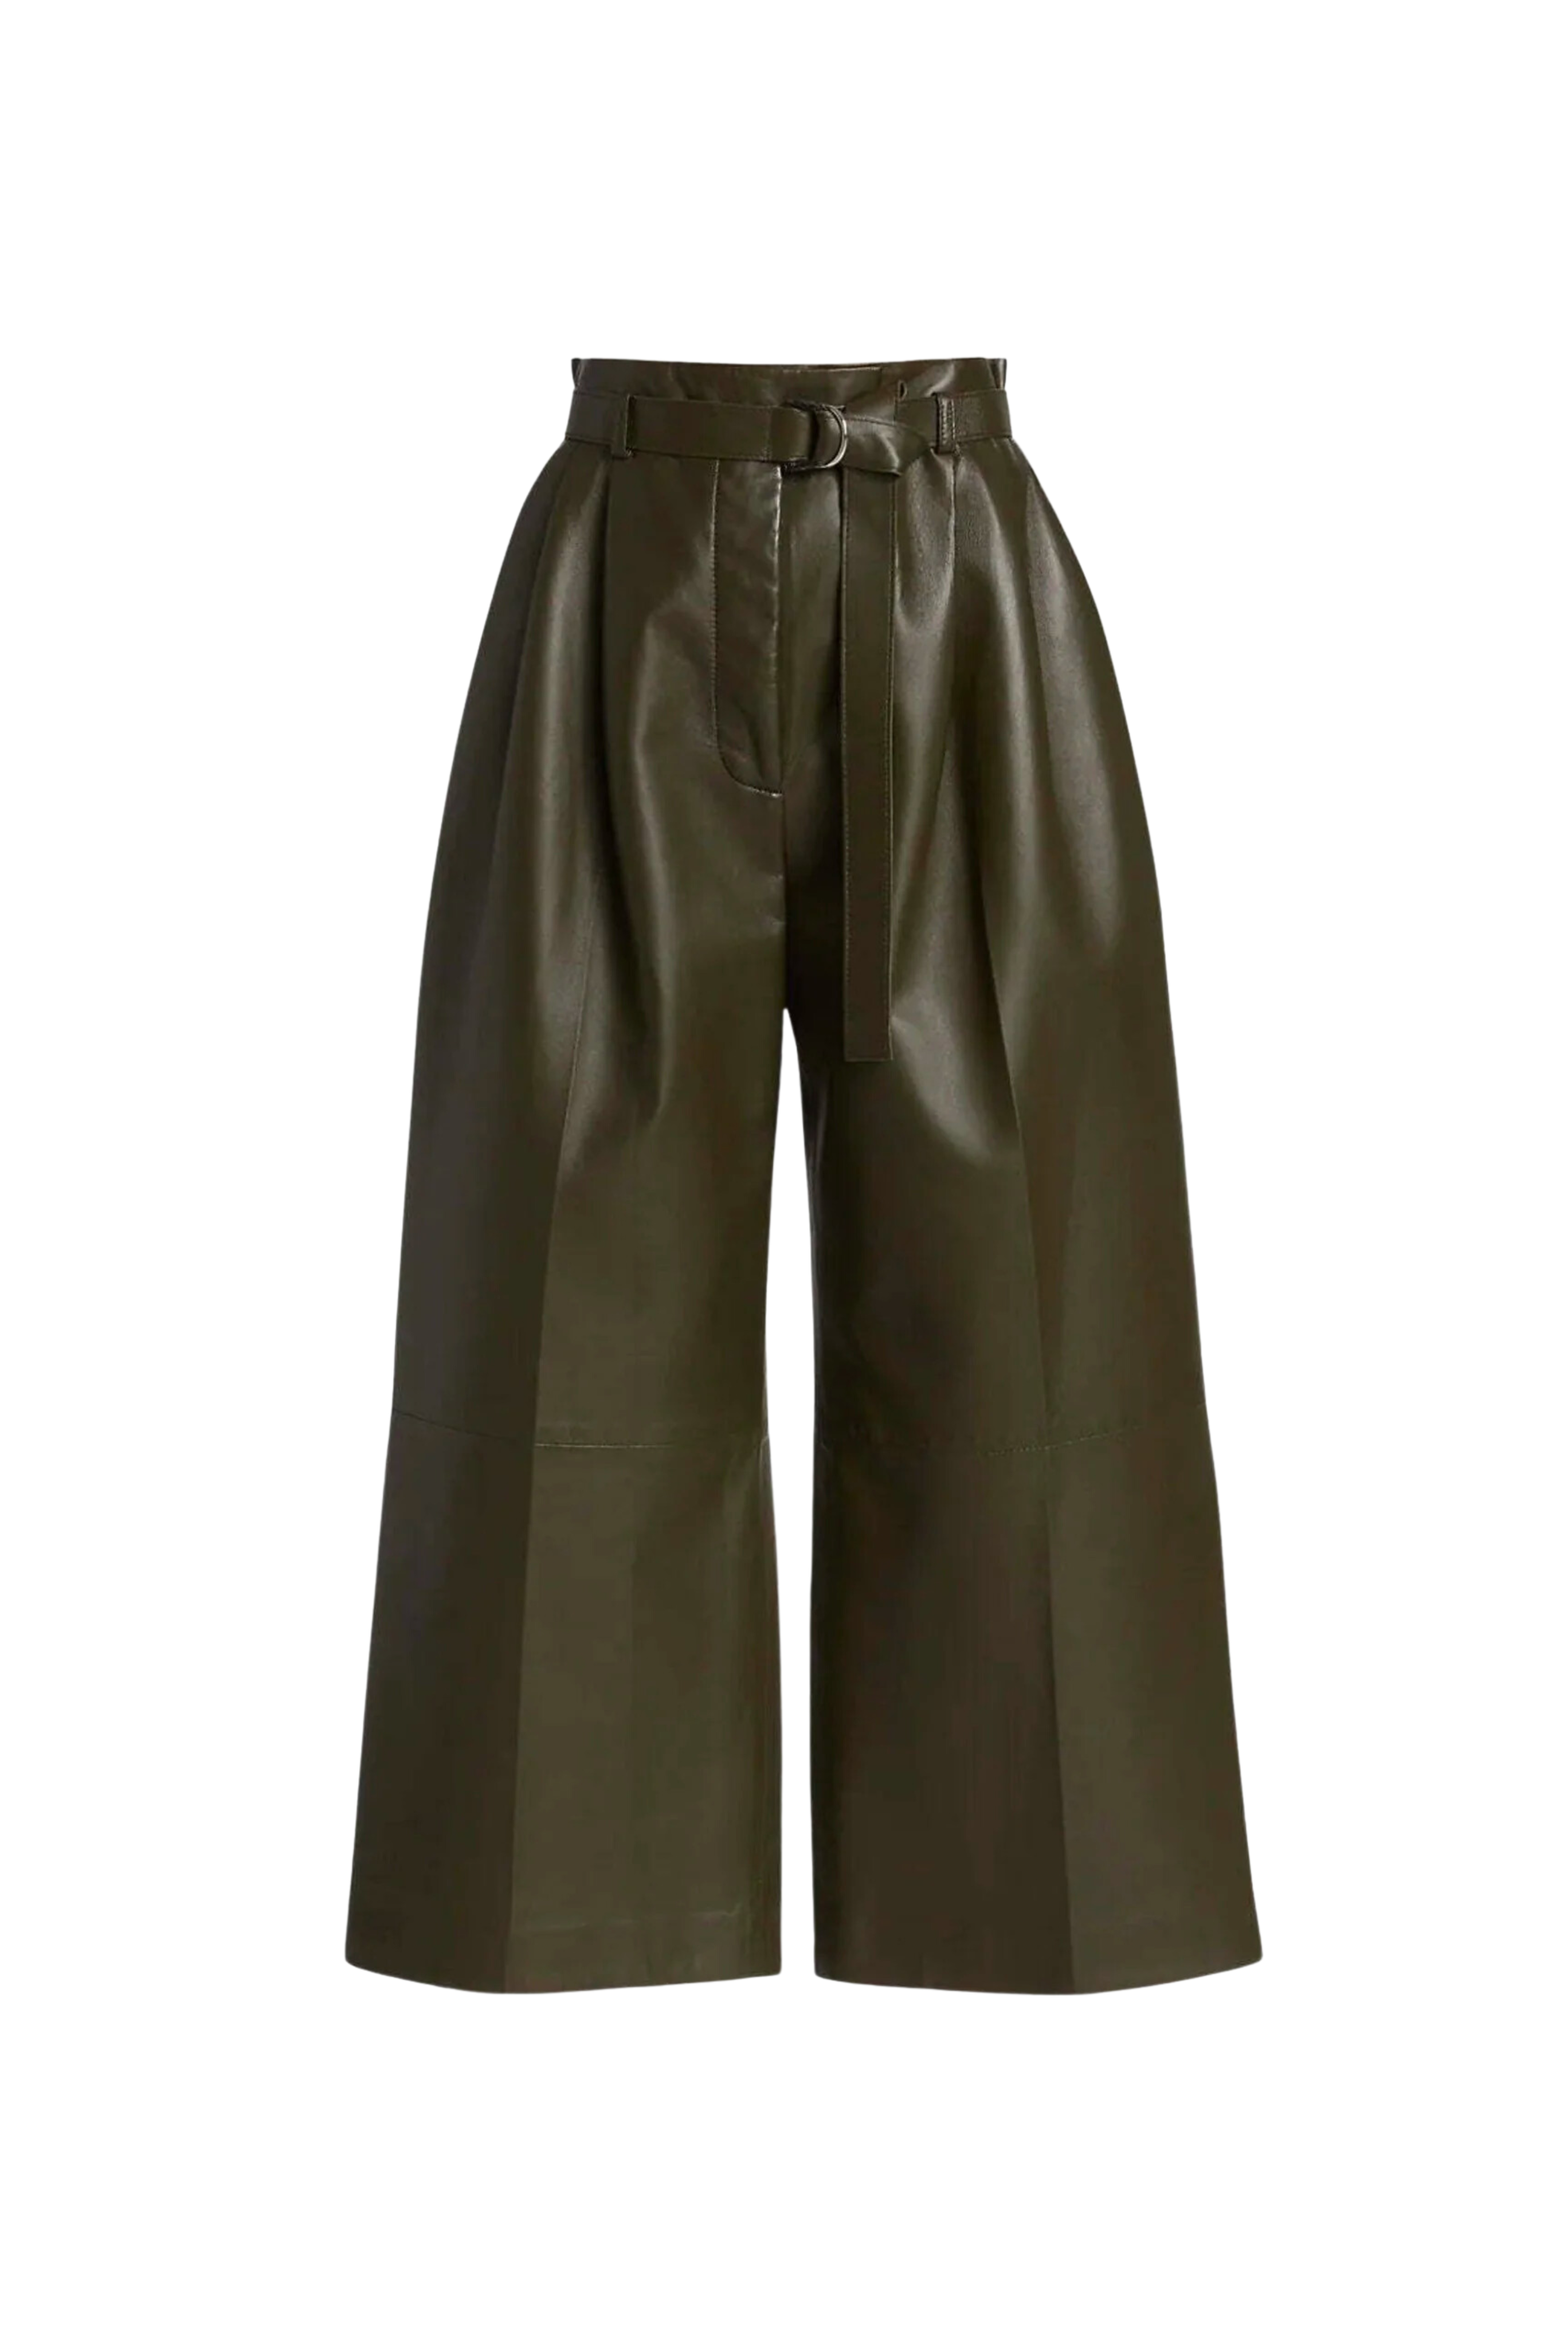 ALTUZARRA Albany Leather Pants